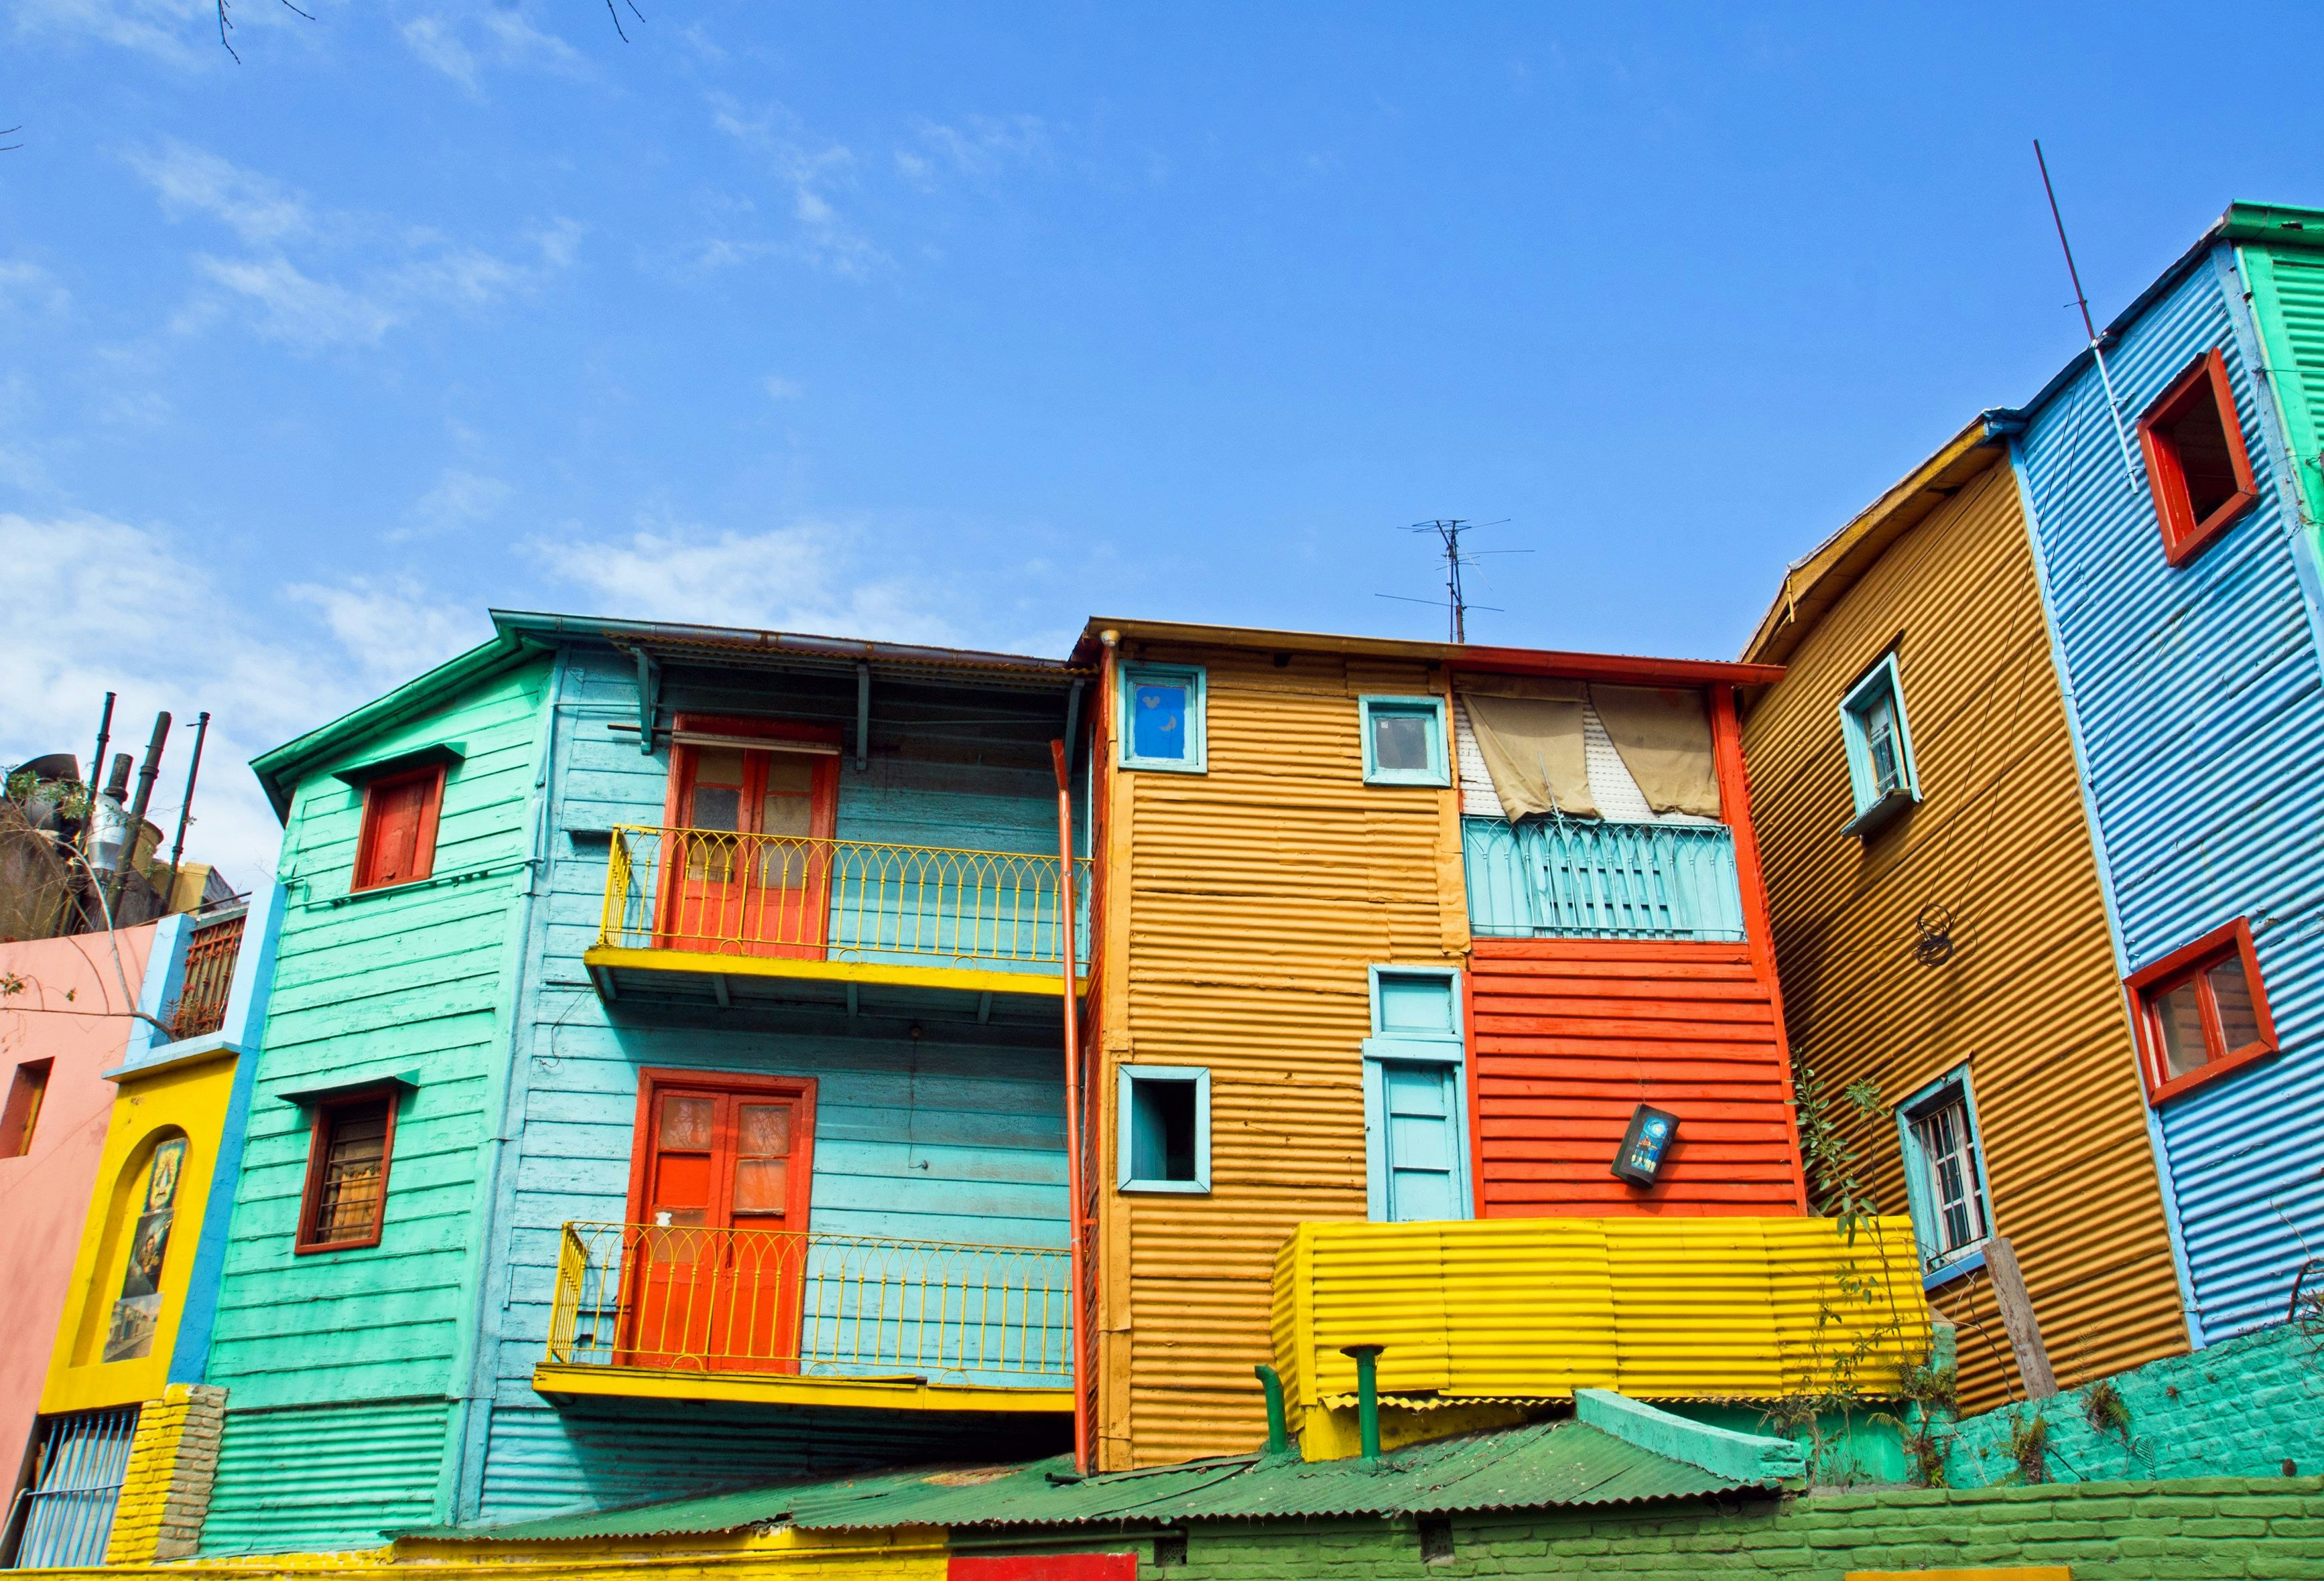 Buenos Aires Caminit Casas coloradas.jpg